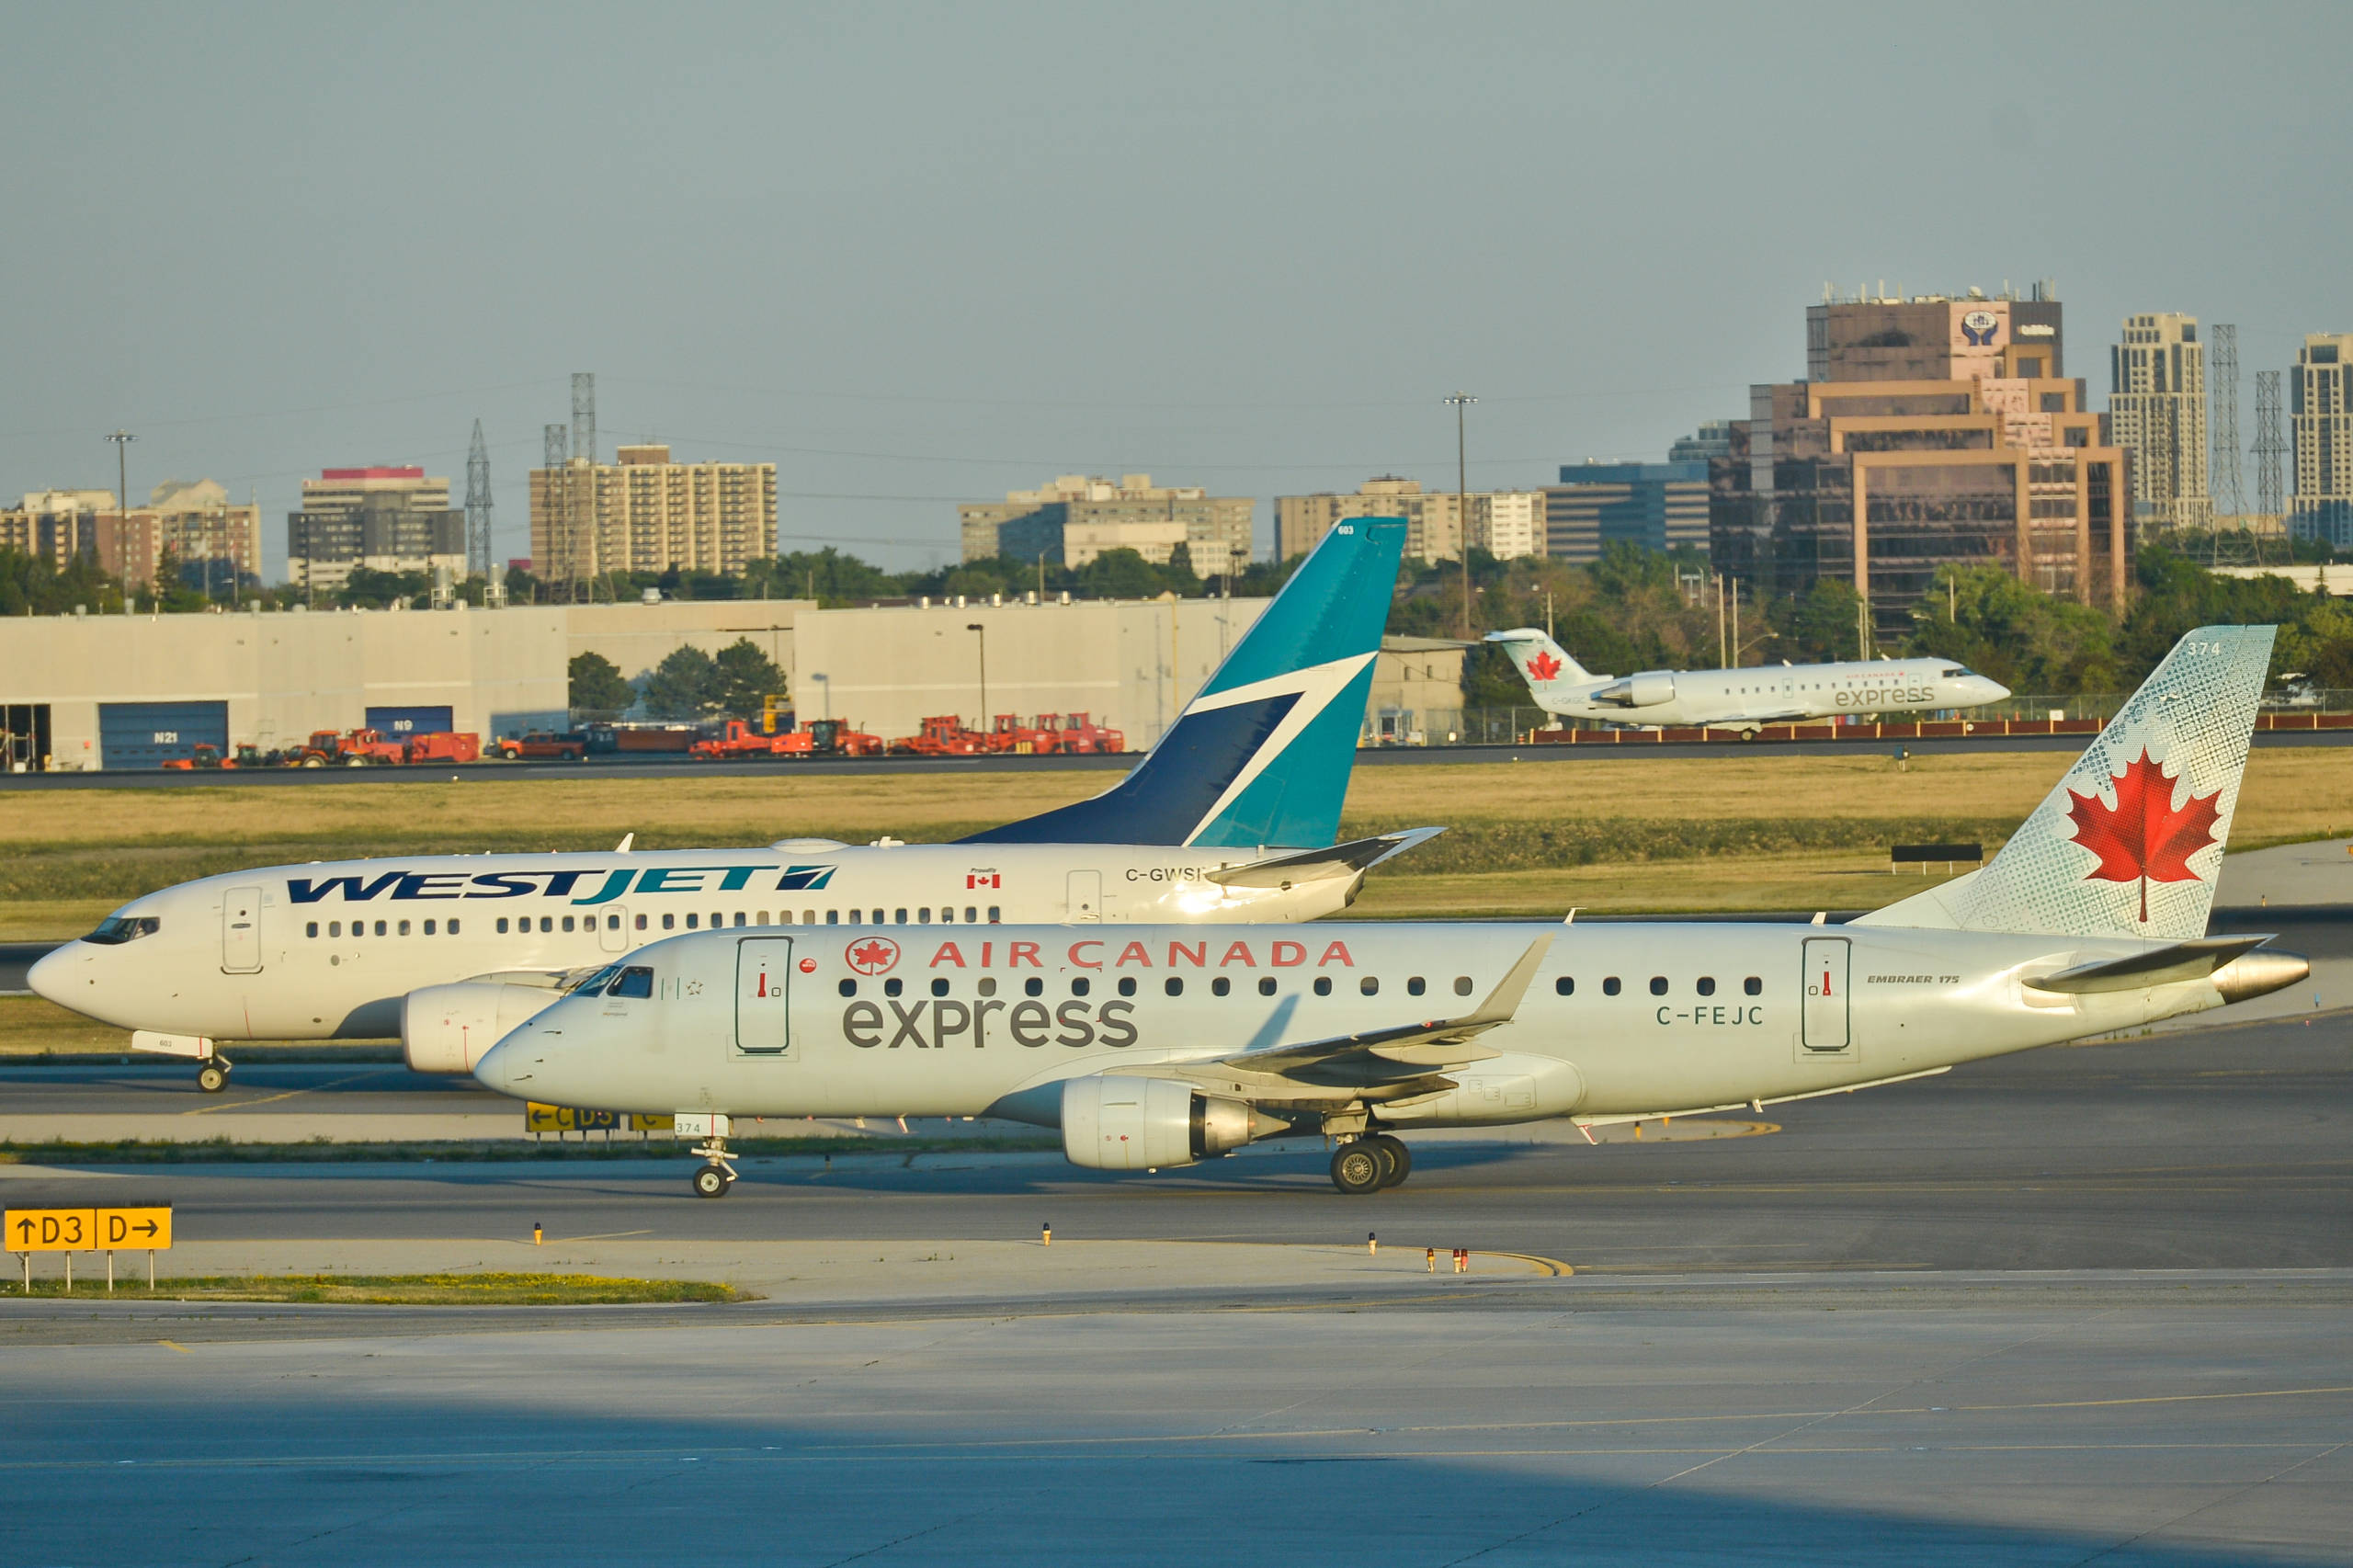 Planes at Toronto airport